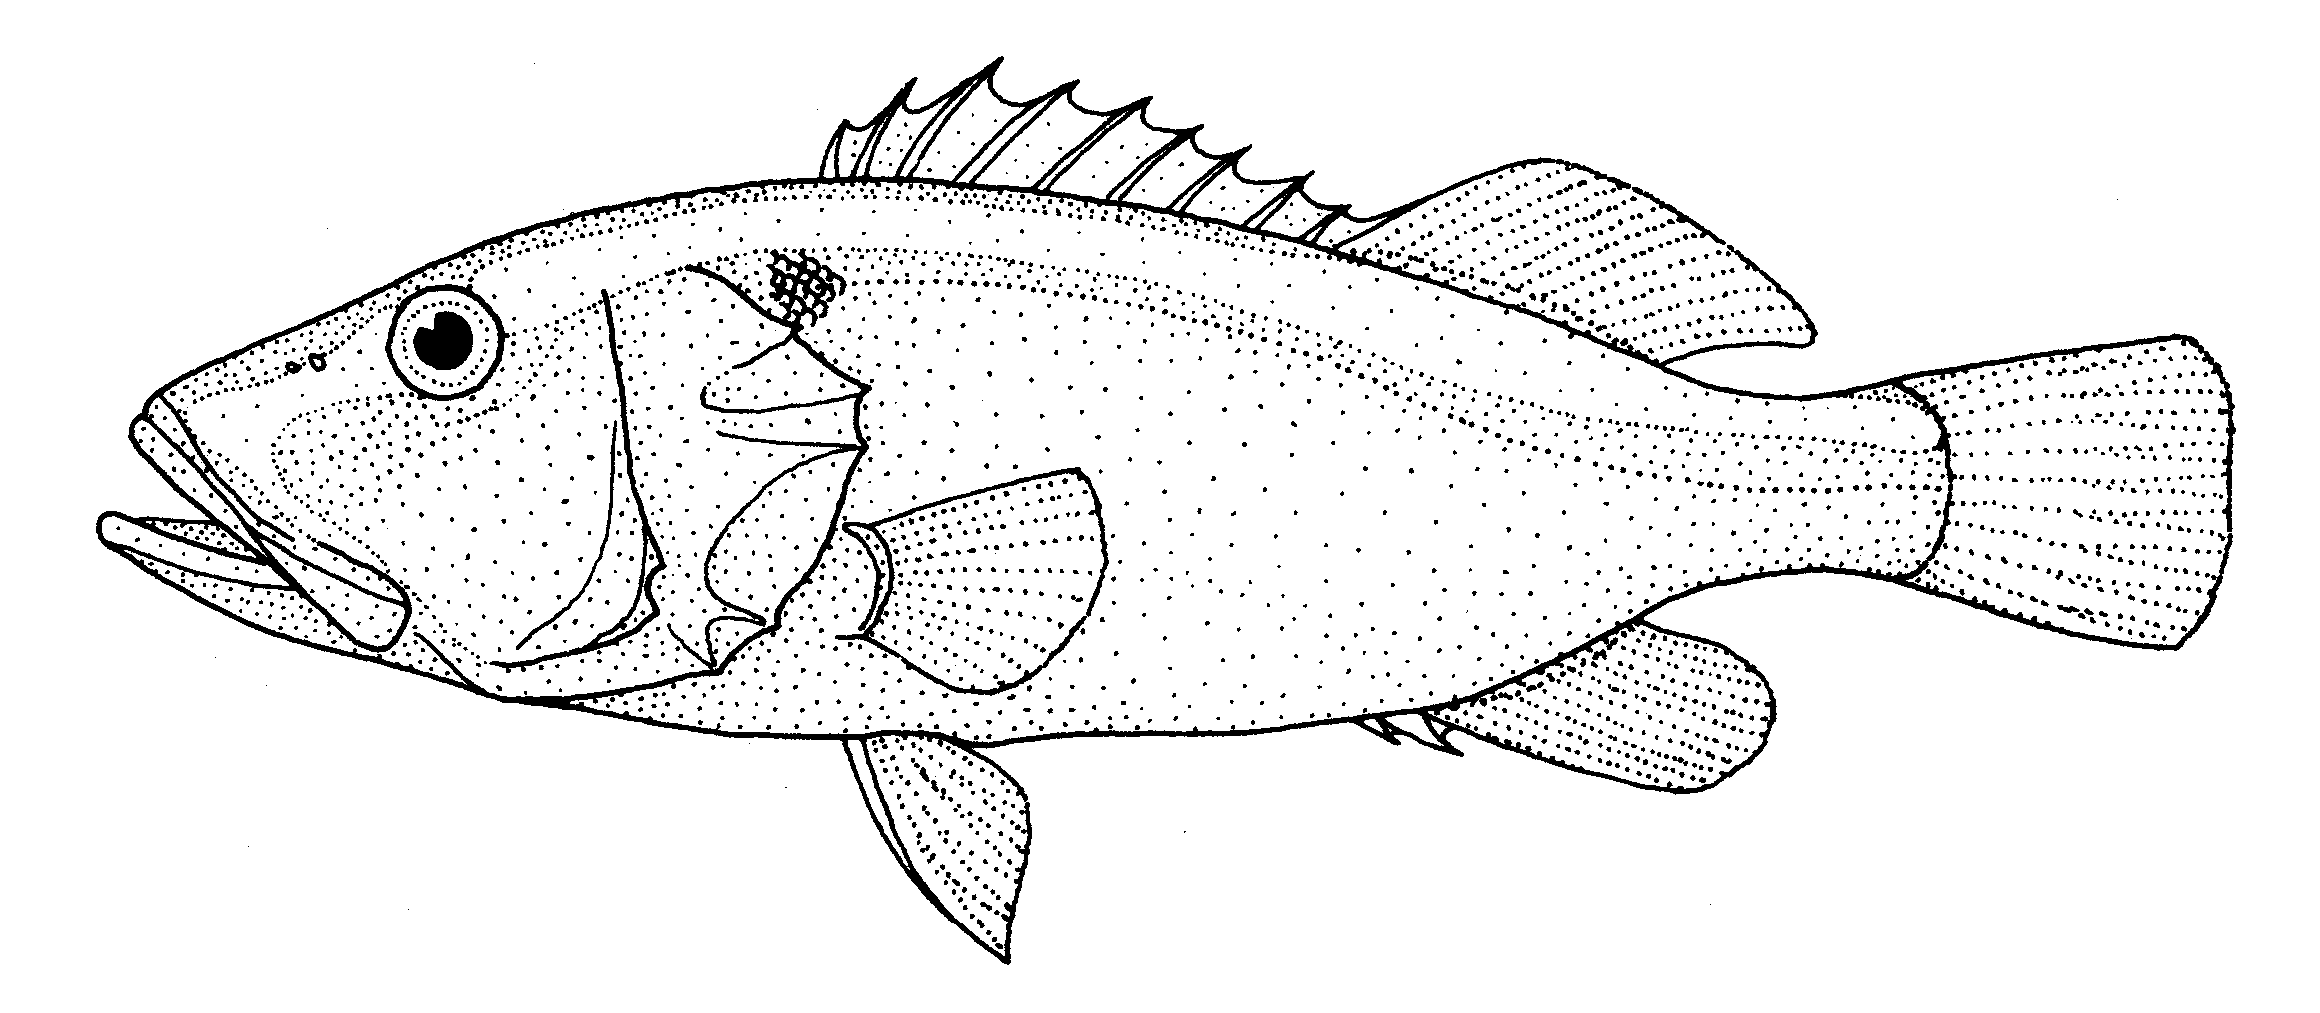  Aulacocephalus temminckii